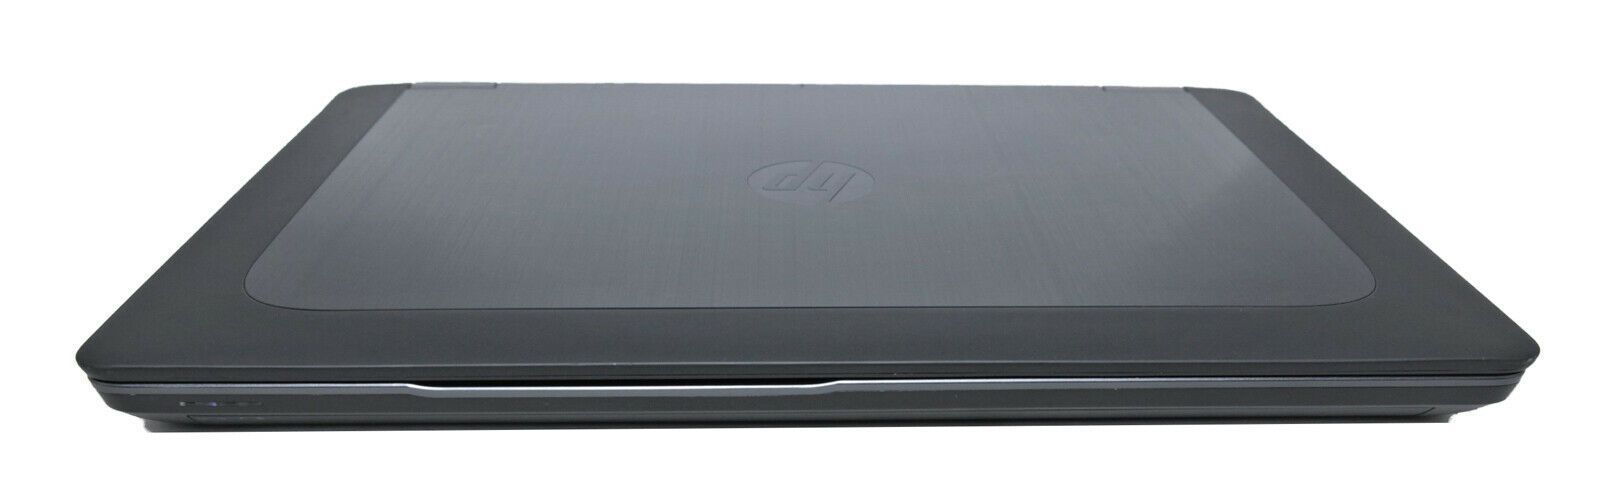 HP ZBook 15 G2 CAD Laptop: 32GB RAM, Core i7, 256GB SSD+HDD, Quadro Warranty VAT - CruiseTech